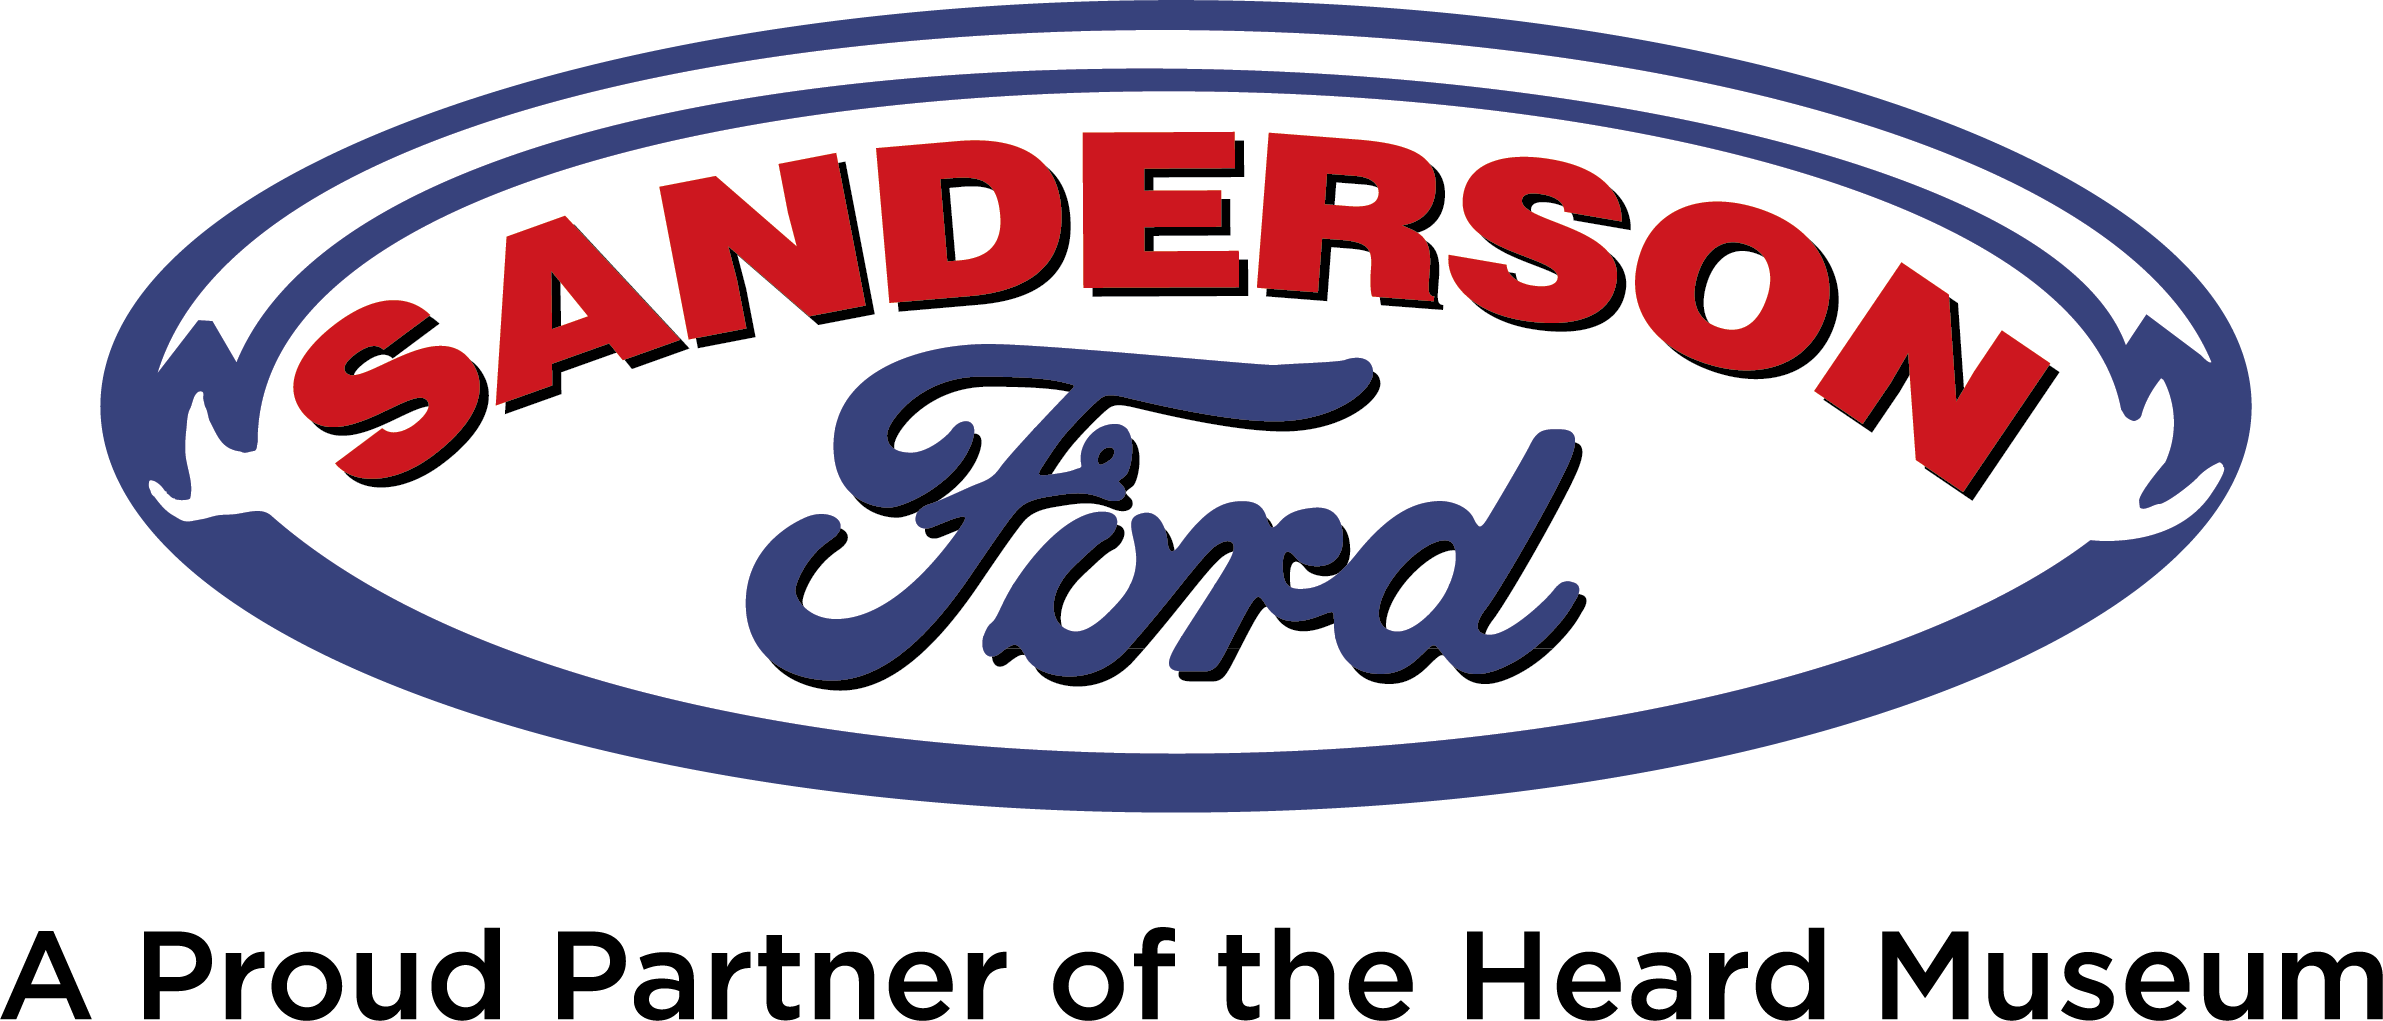 Sanderson ford logo.